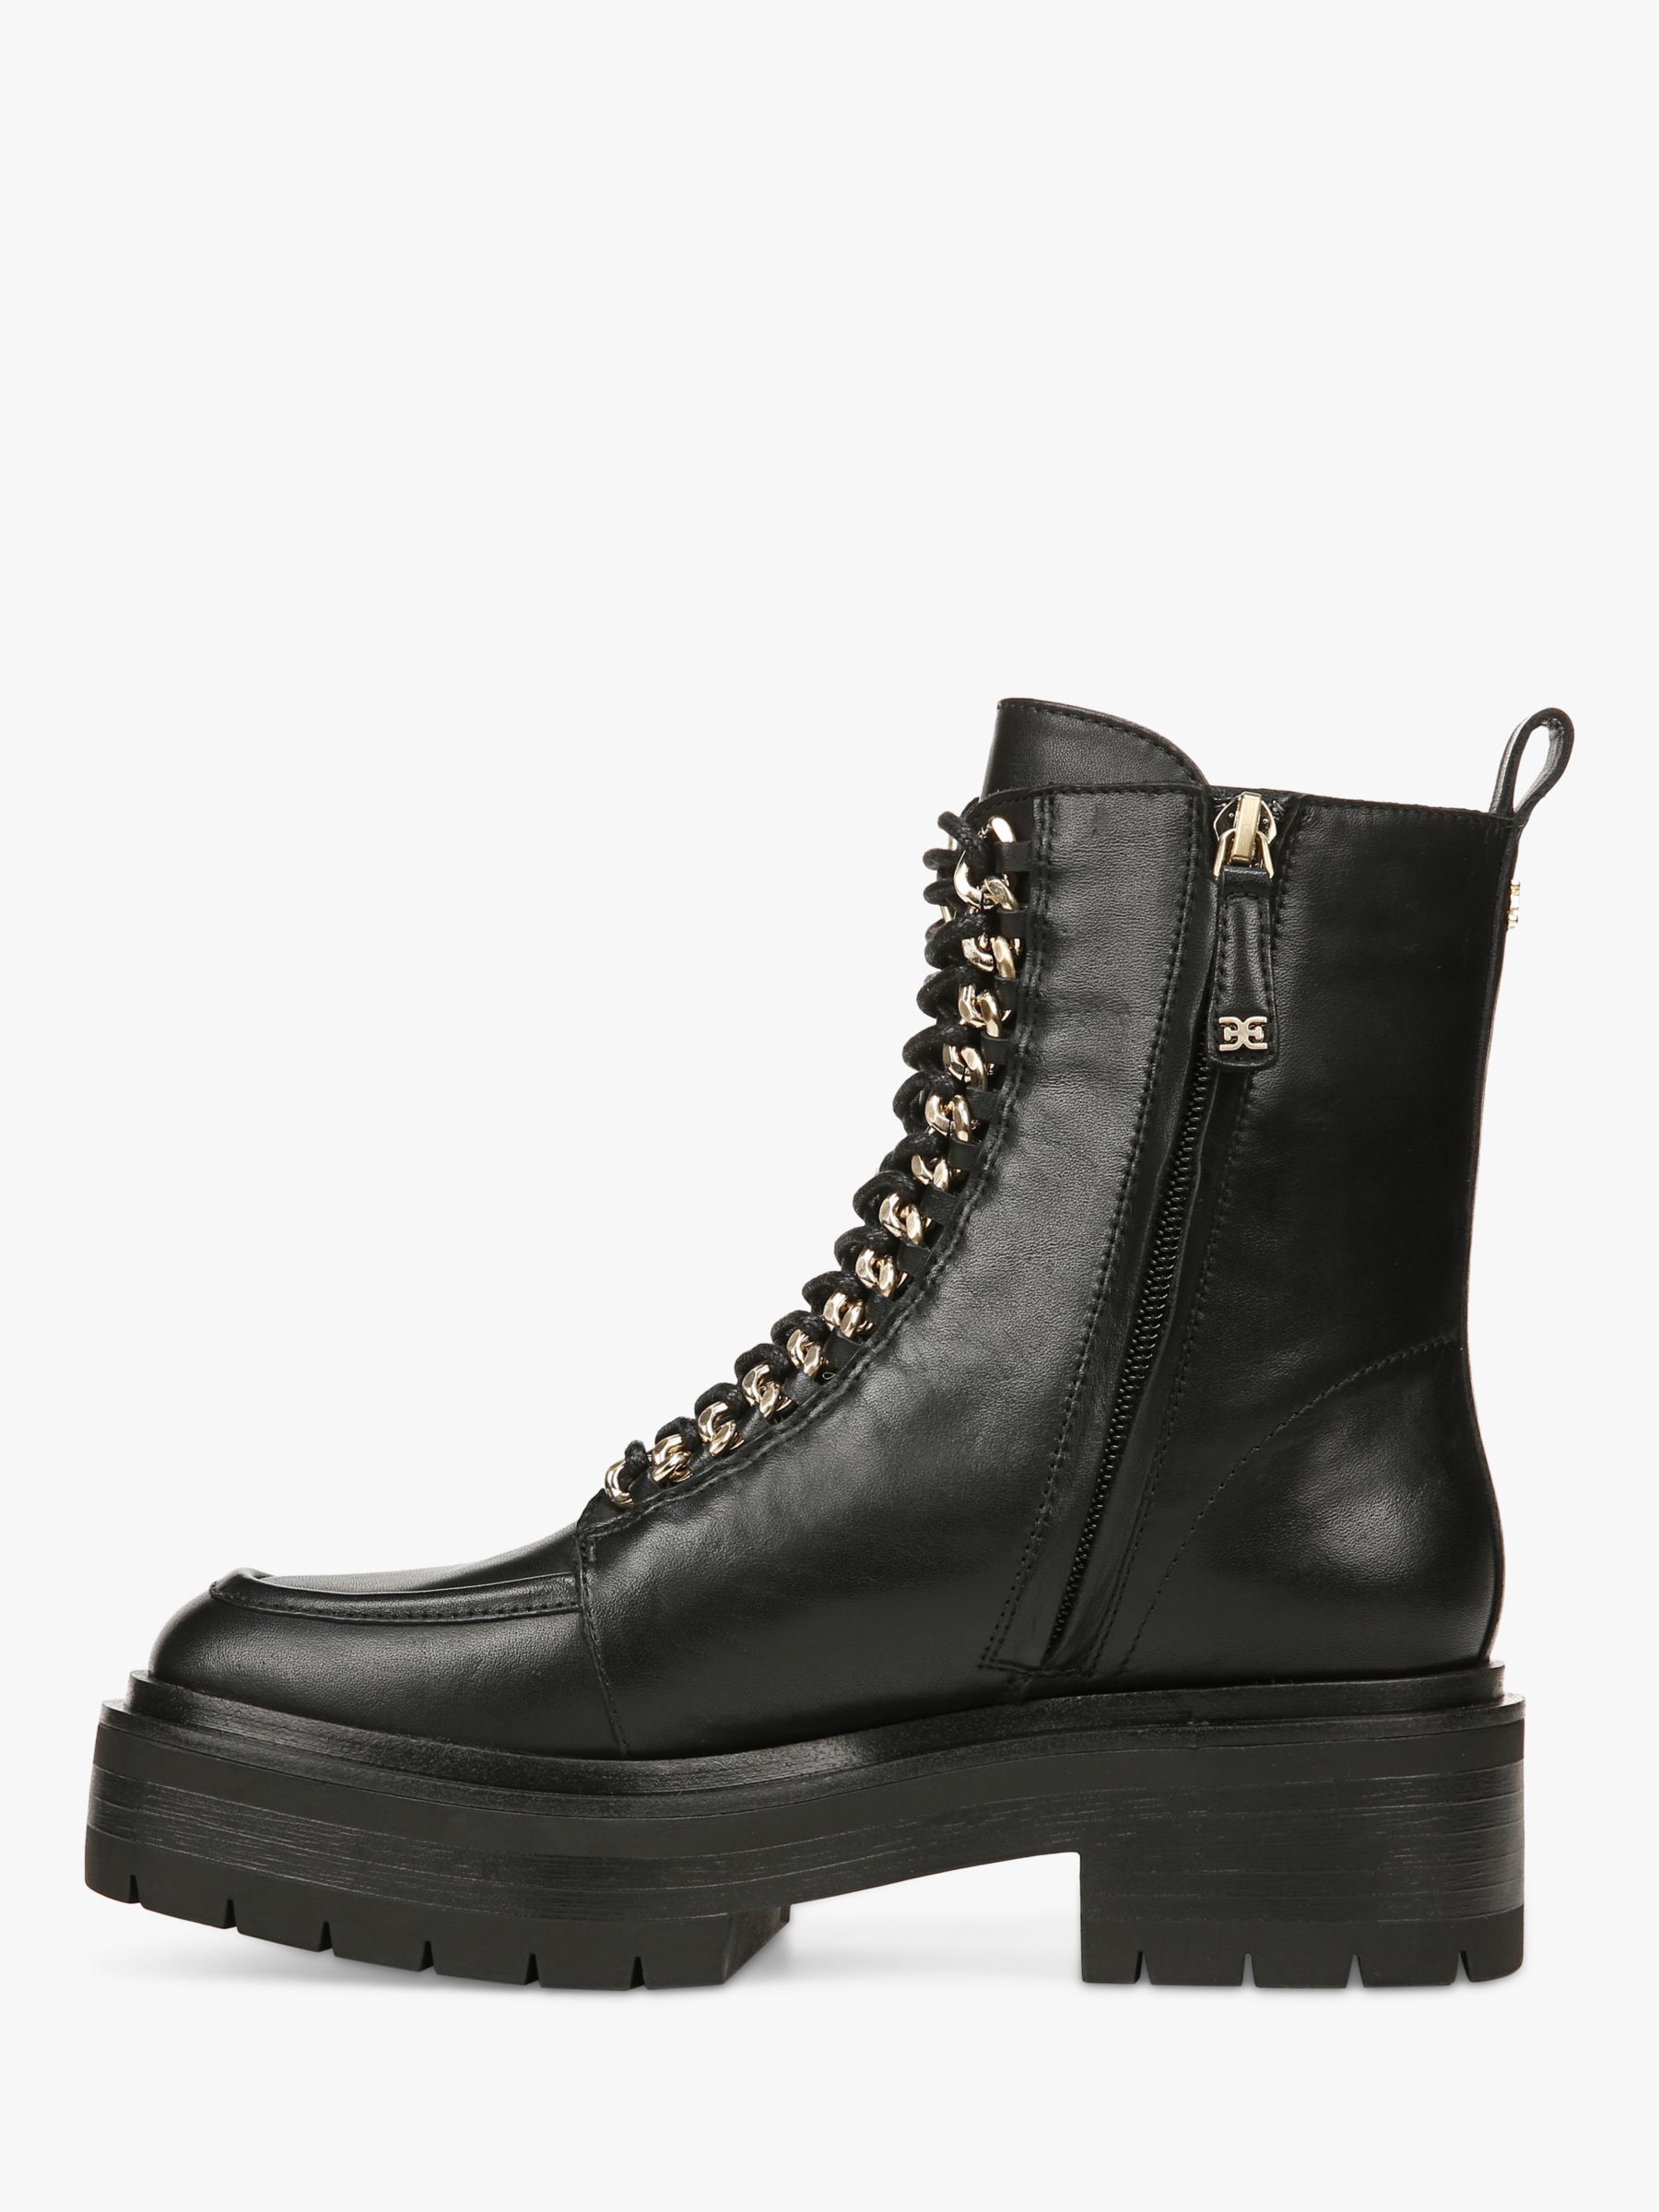 Sam Edelman Lovrin Chelsea Boots, Black, 3